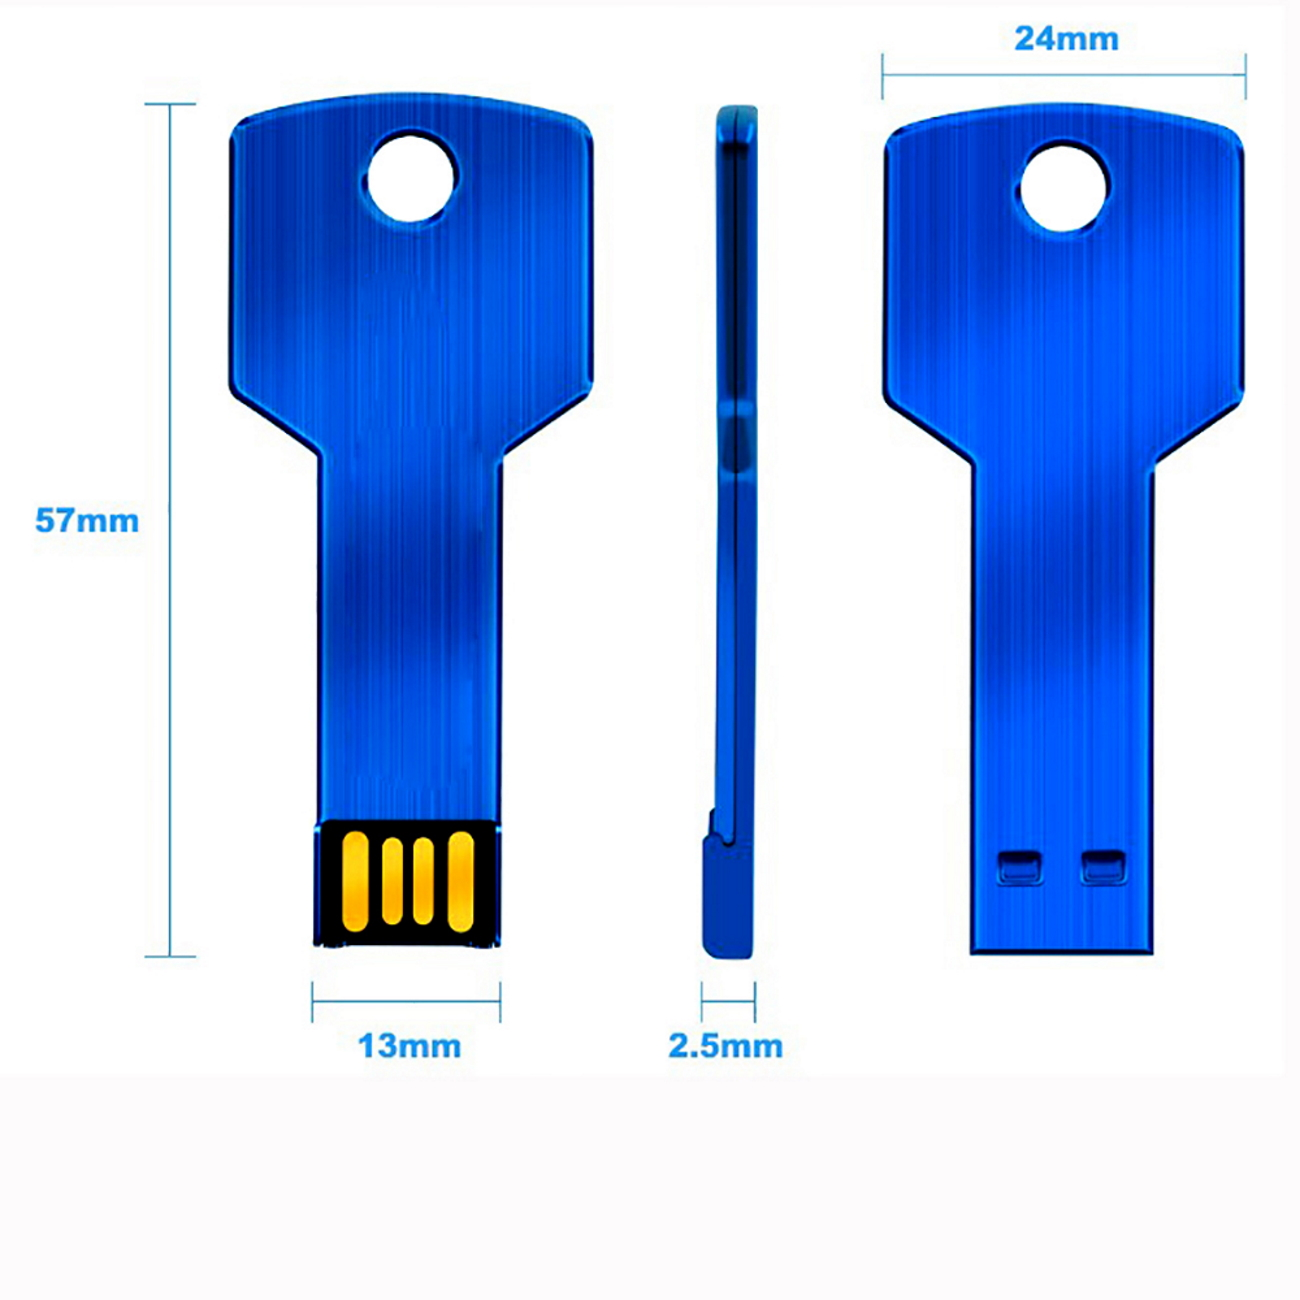 USB GERMANY Key Blau 32GB USB-Stick GB) 32 (Blau